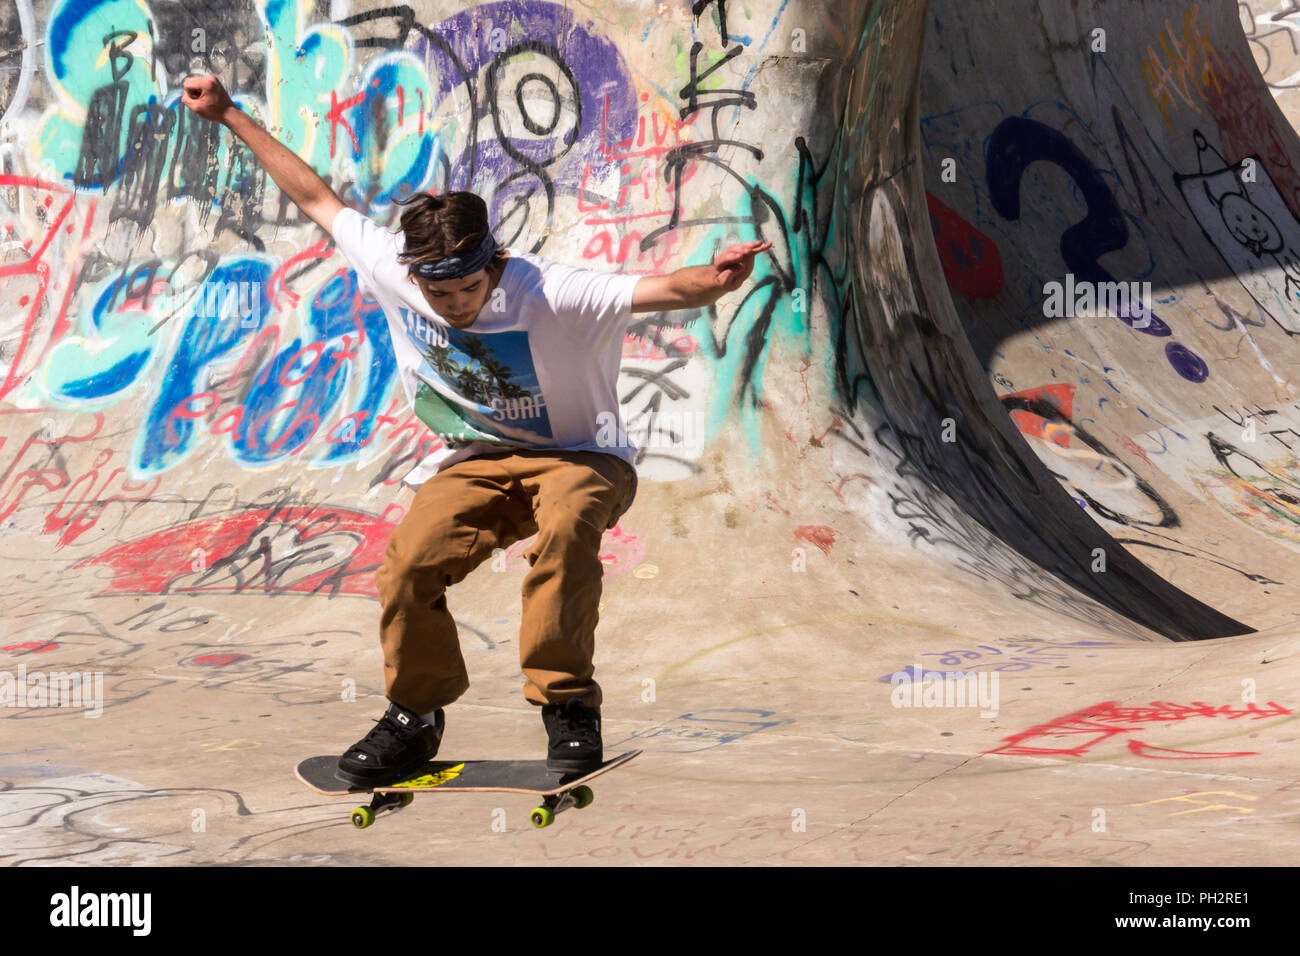 Young Man Skateboarding at the Riverside River Yard Skateboard Bowl, Great Fall, Montana, USA Stock Photo